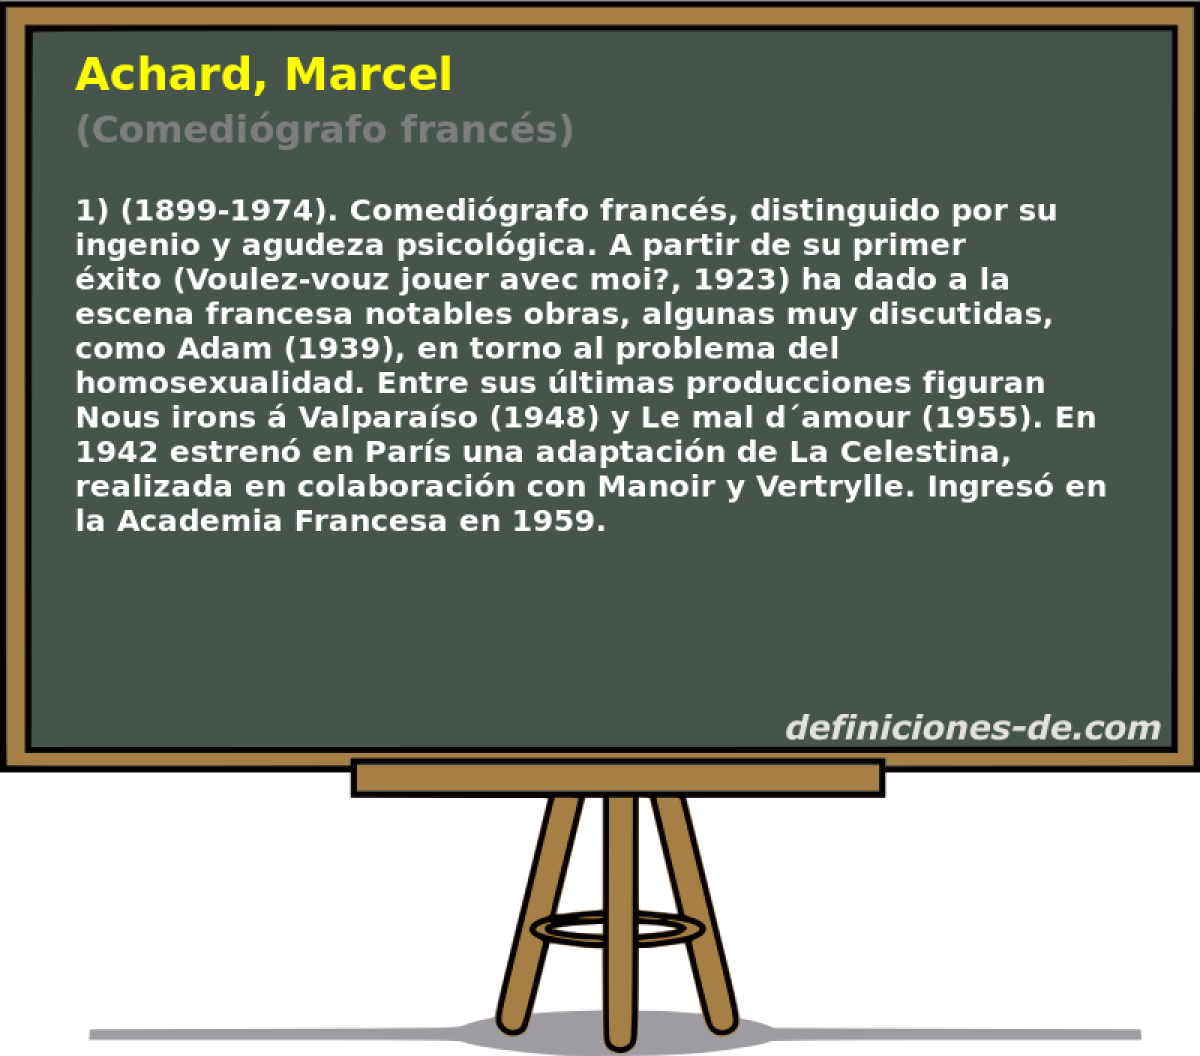 Achard, Marcel (Comedigrafo francs)